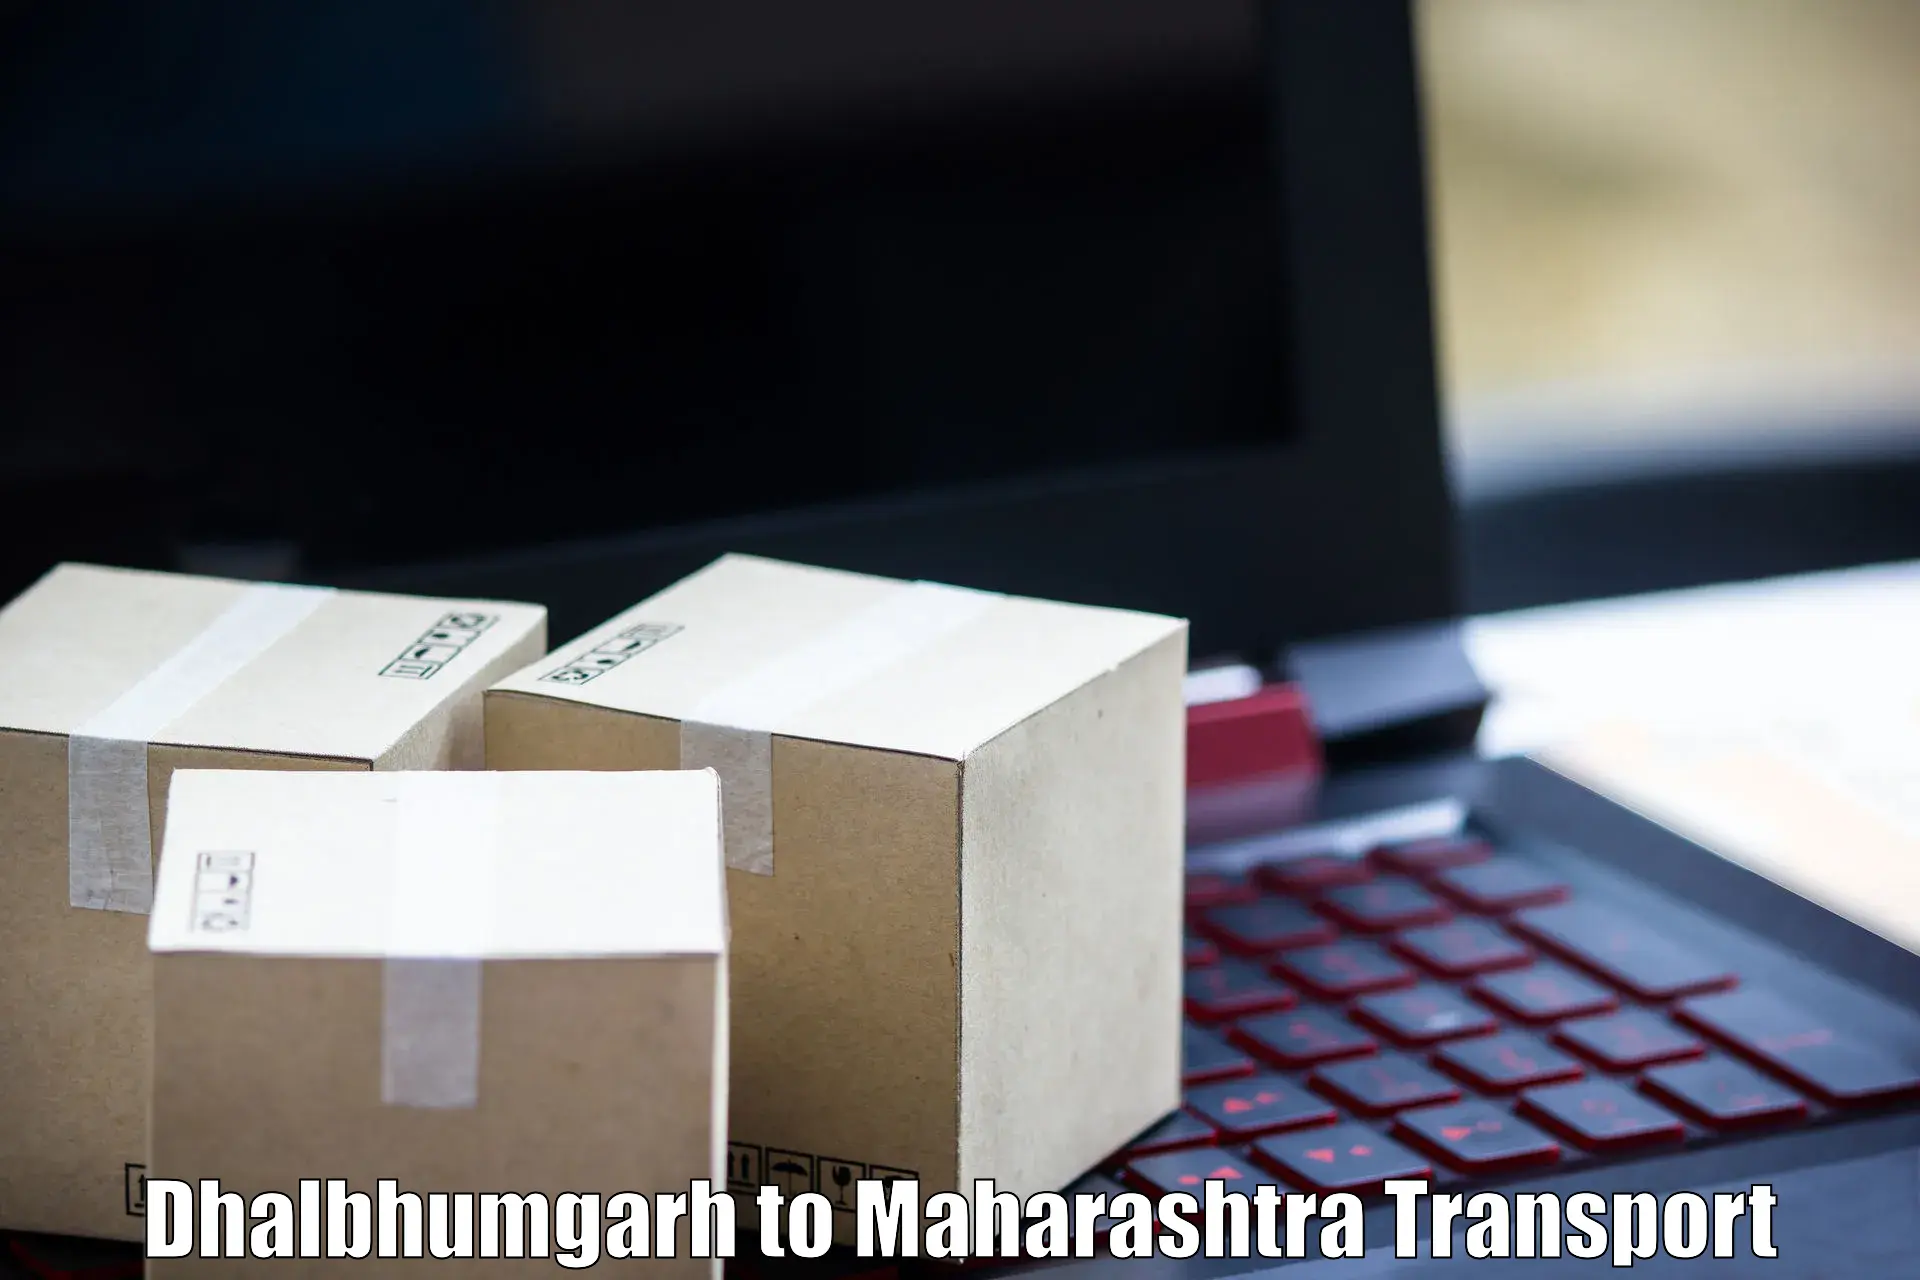 Truck transport companies in India Dhalbhumgarh to Mahabaleshwar